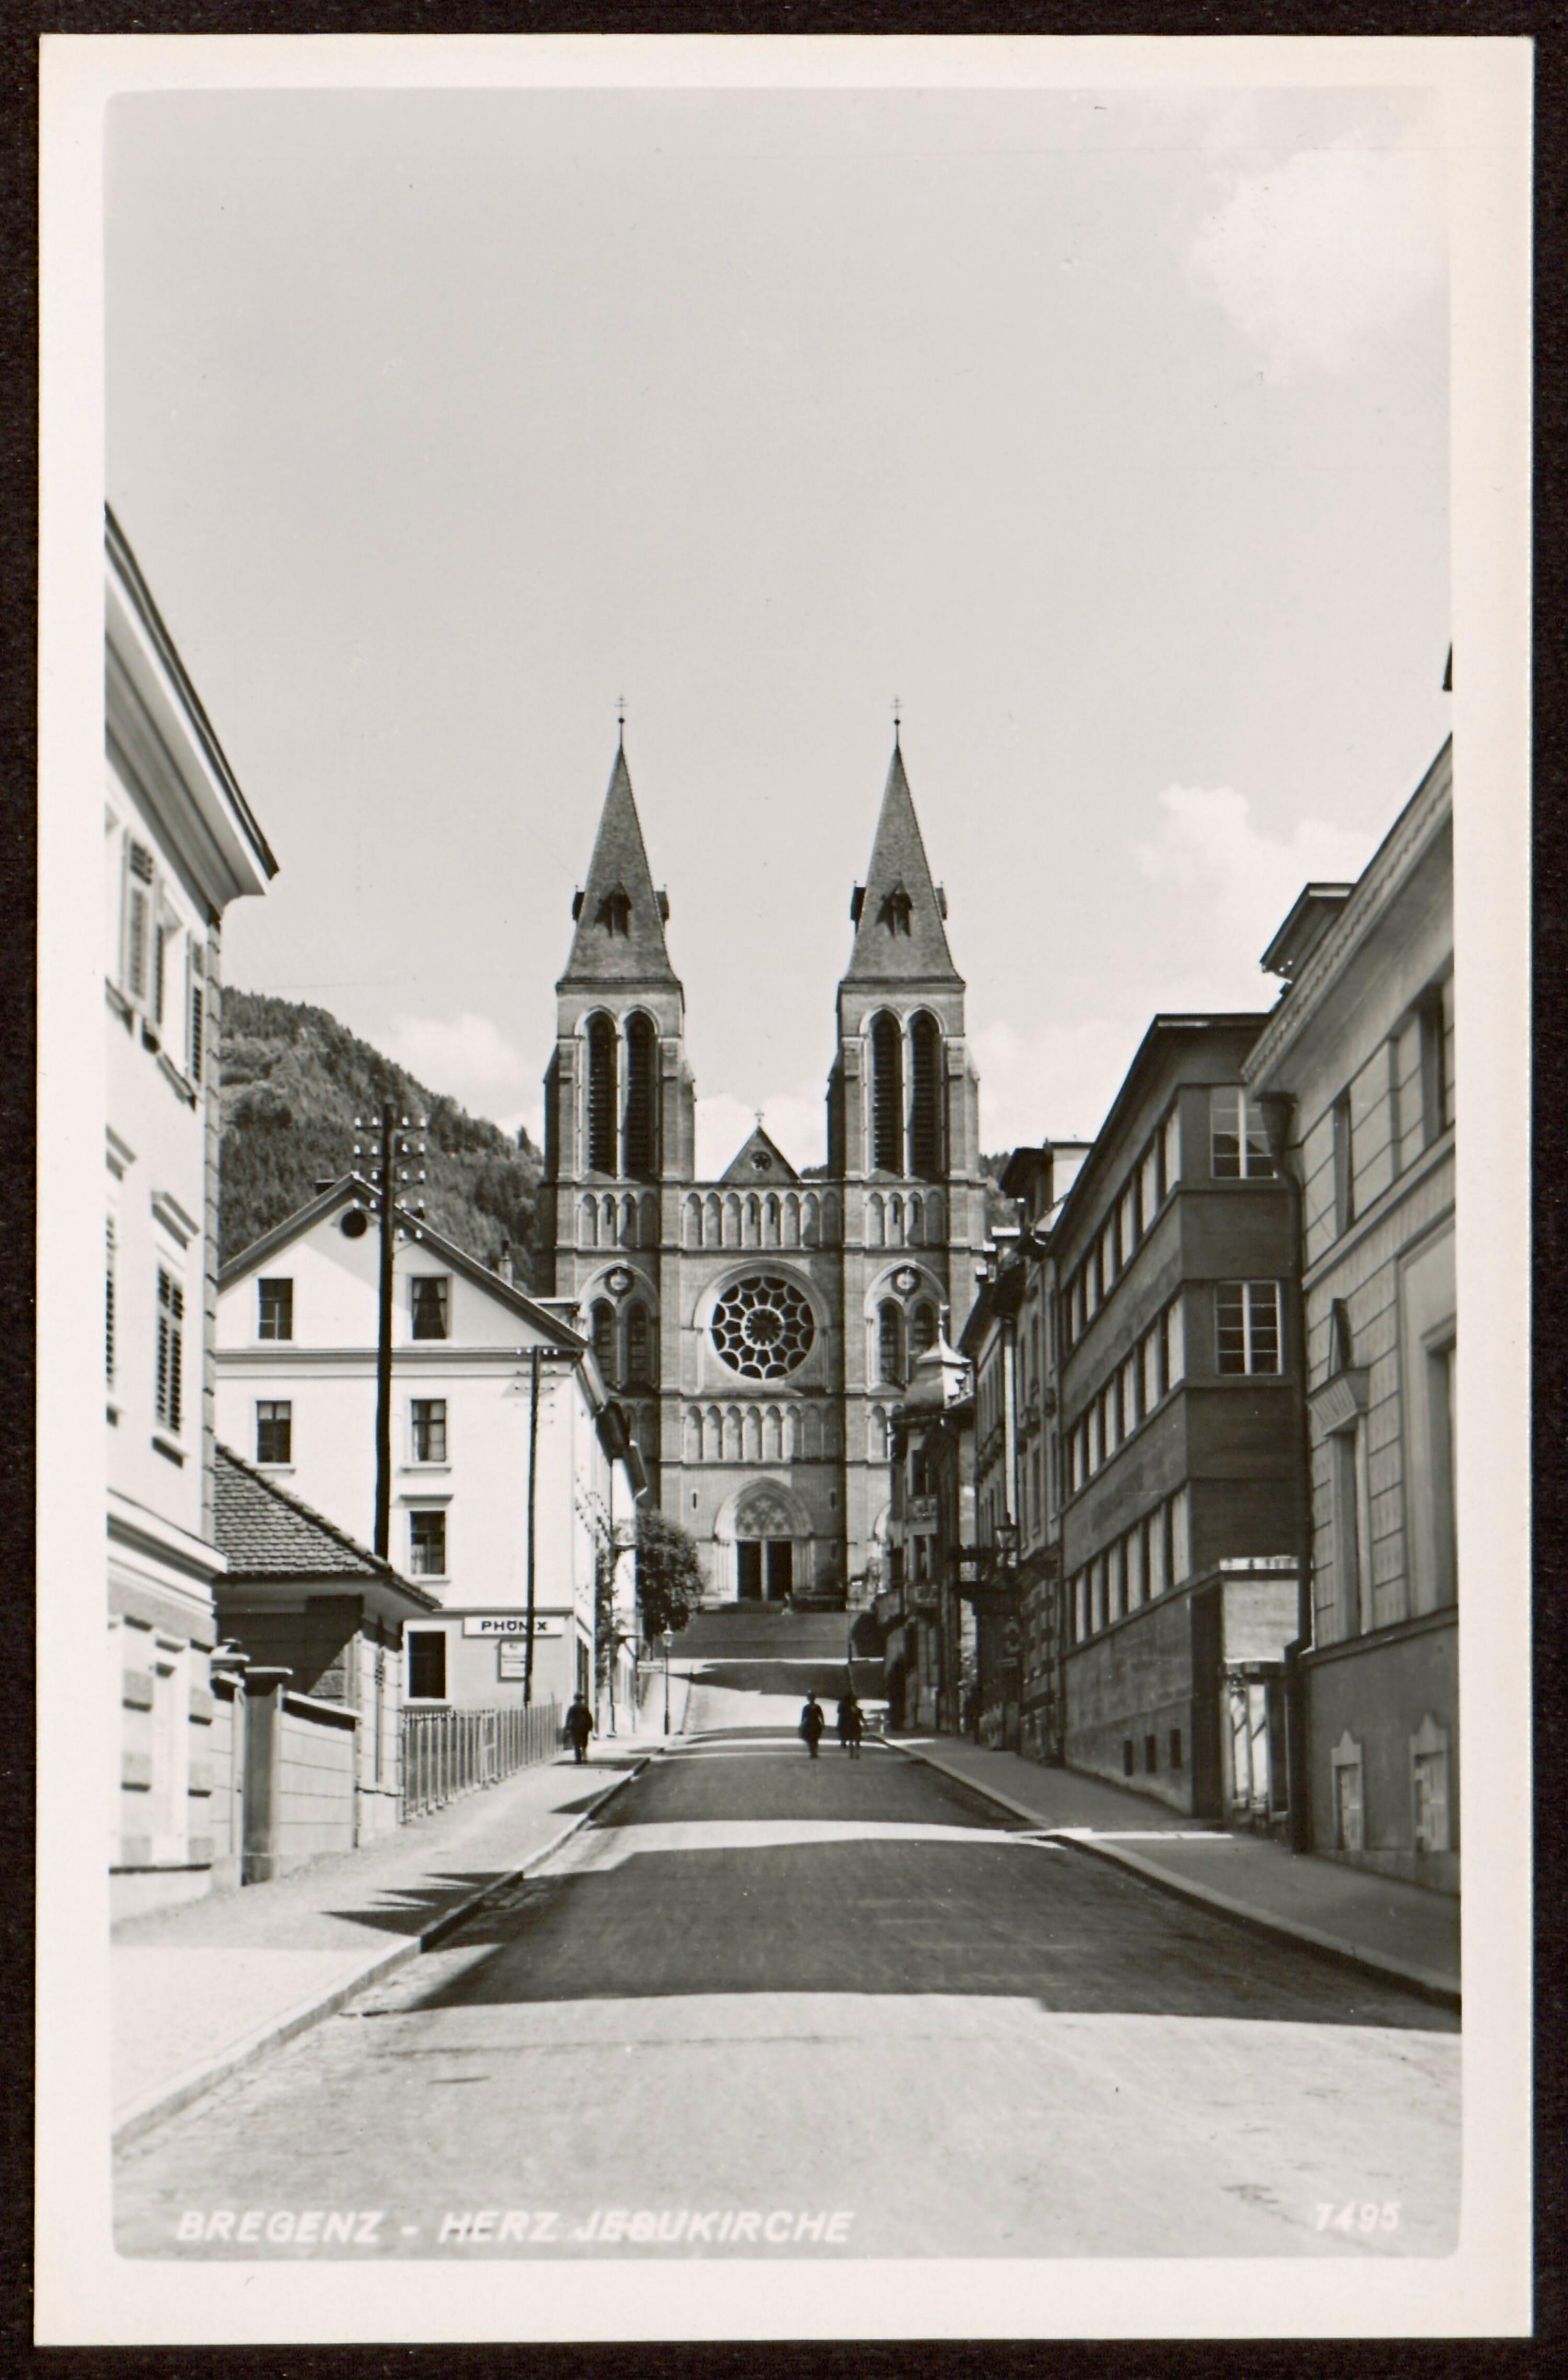 Bregenz - Herz Jesukirche></div>


    <hr>
    <div class=